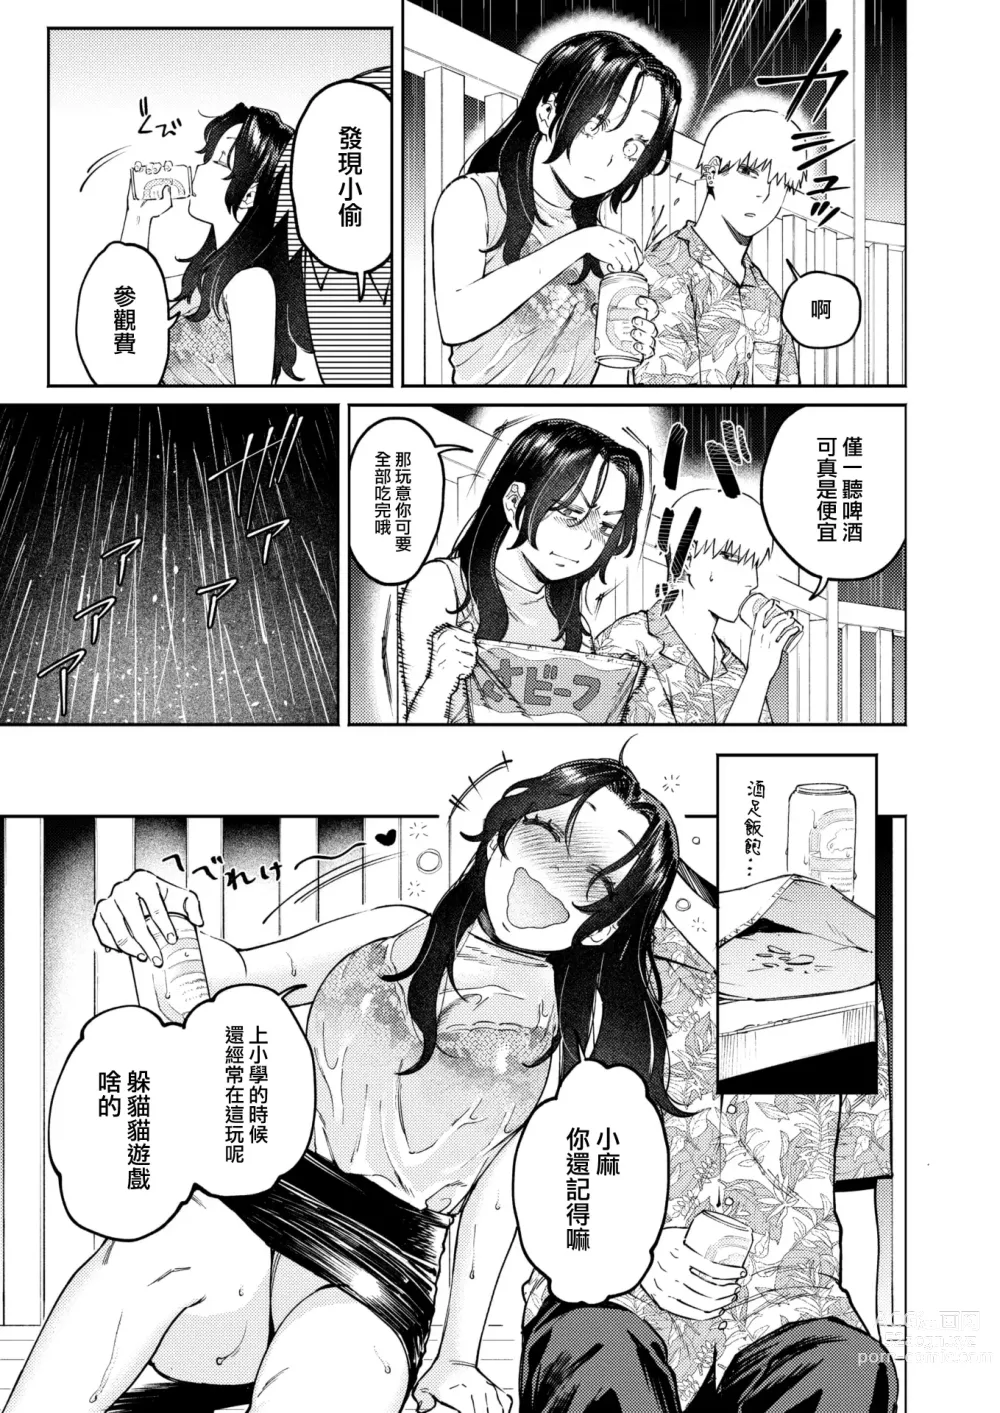 Page 6 of manga Gazebo nite - Under a Gazebo